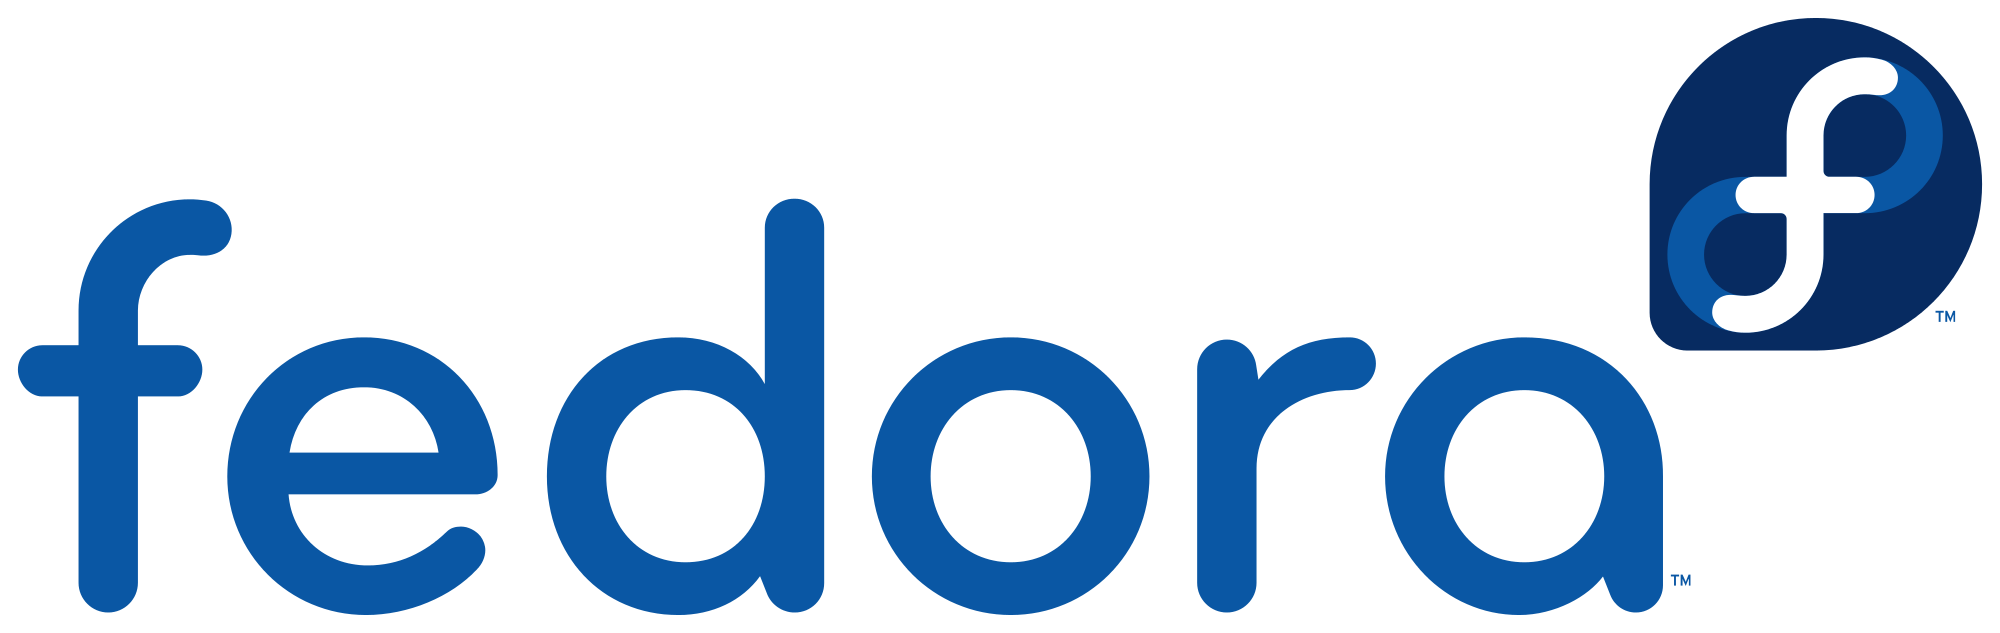 2000px-Fedora logo and wordmark.svg1